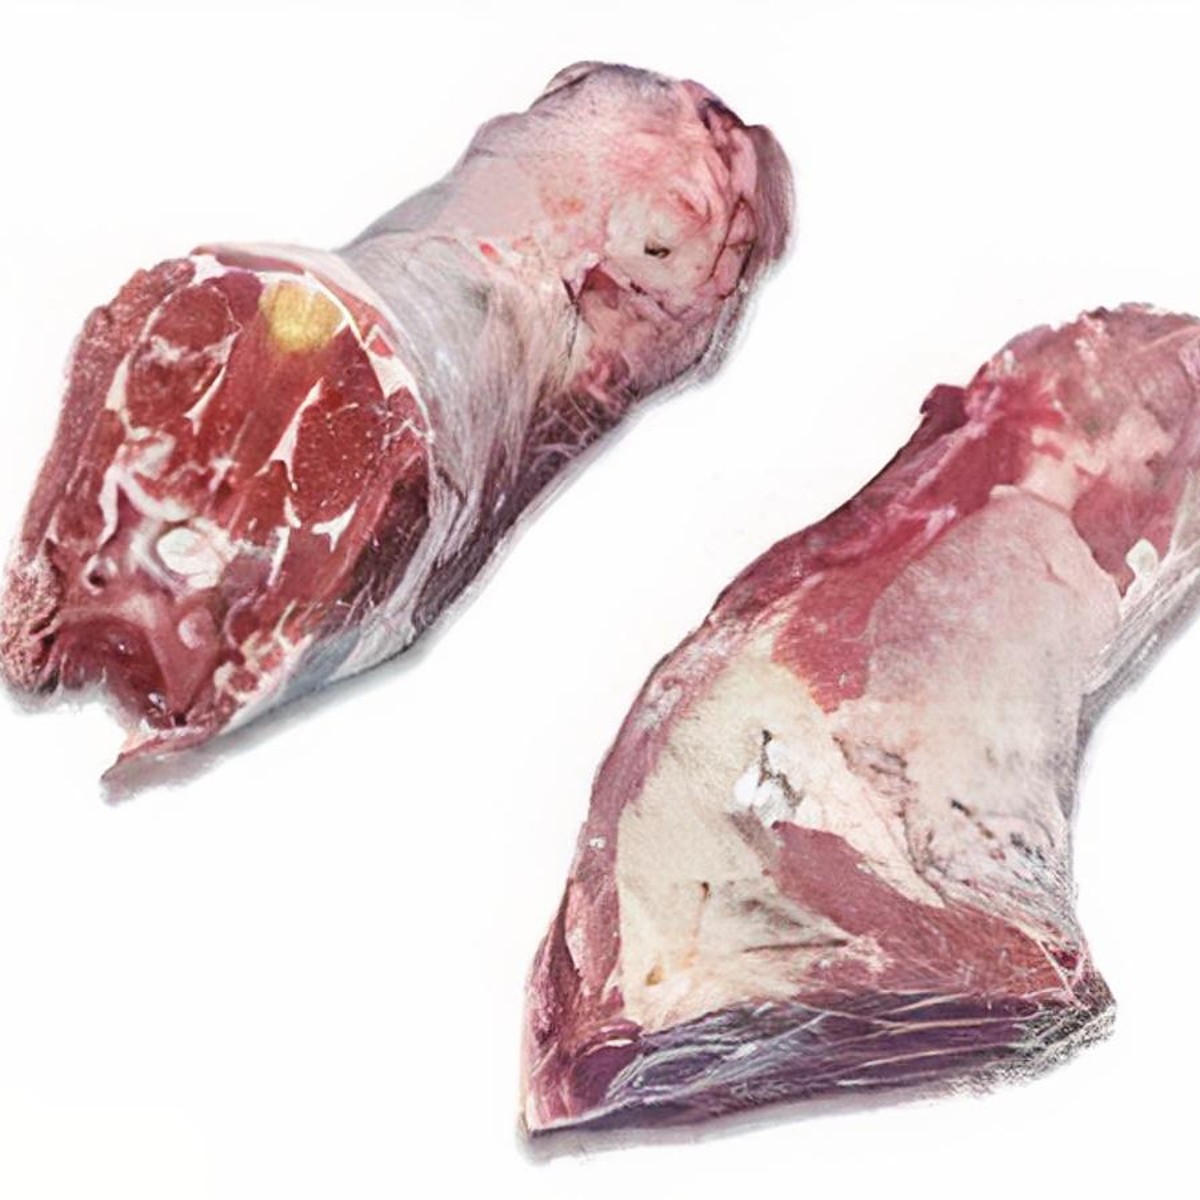 Beef Hind Shank Boneless approx 2.5lbs